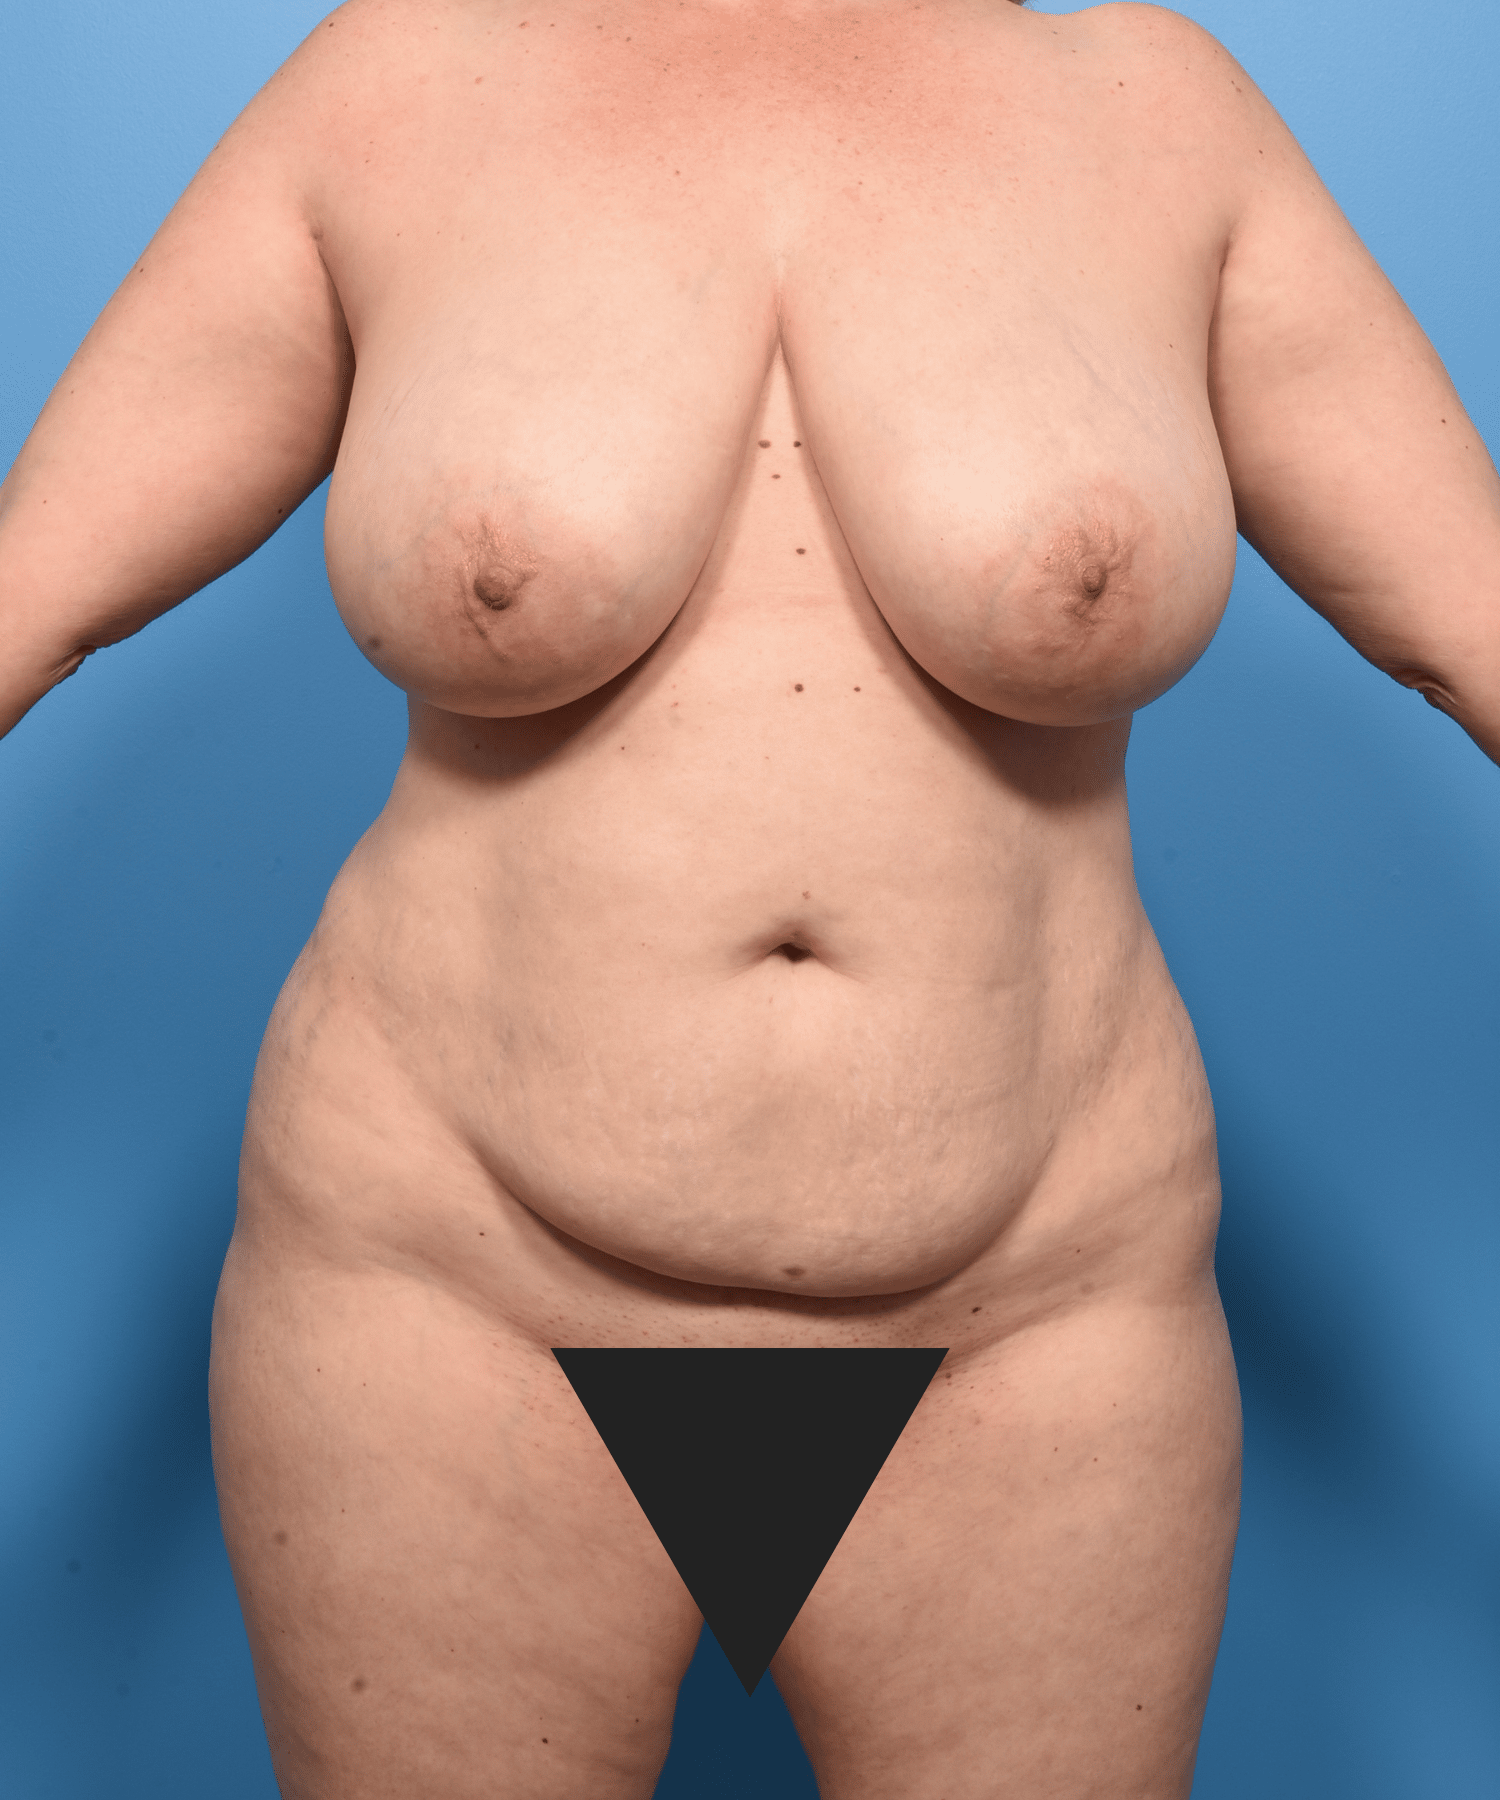 Abdominoplasty, Lipo abdomen, flanks, fat transfer to buttocks/hips